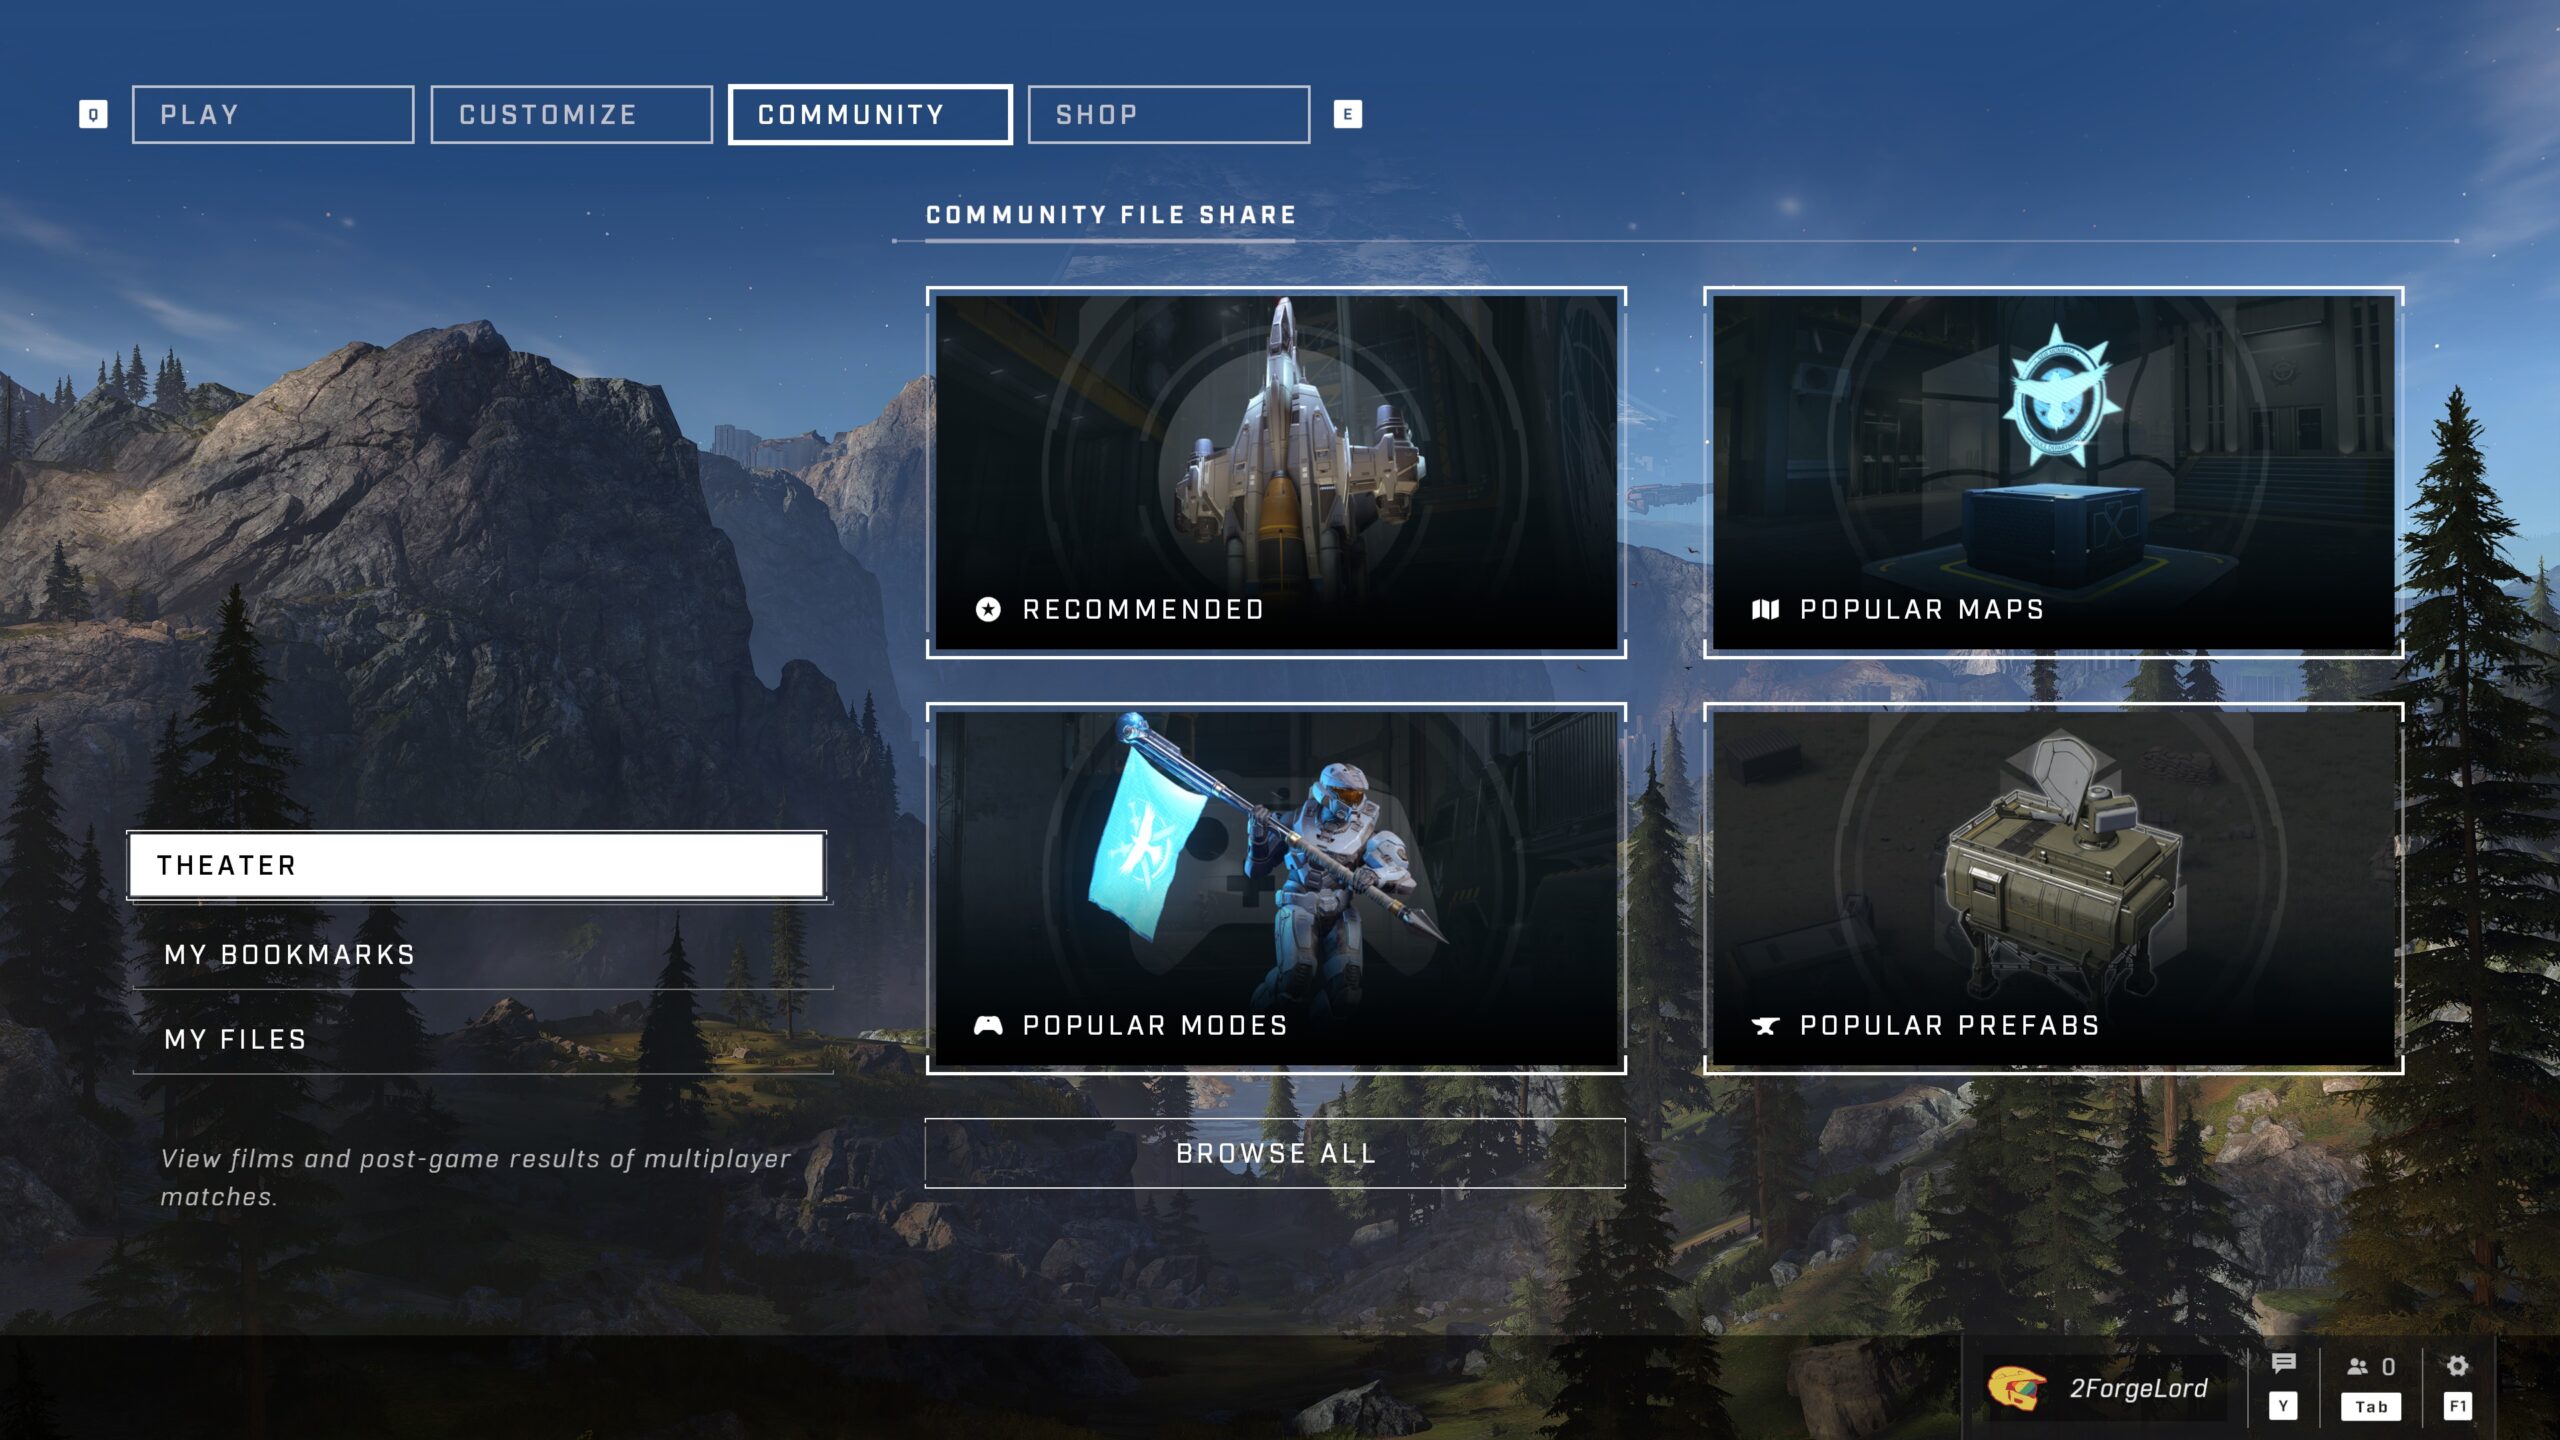 Halo Infinite "Community" tab menu